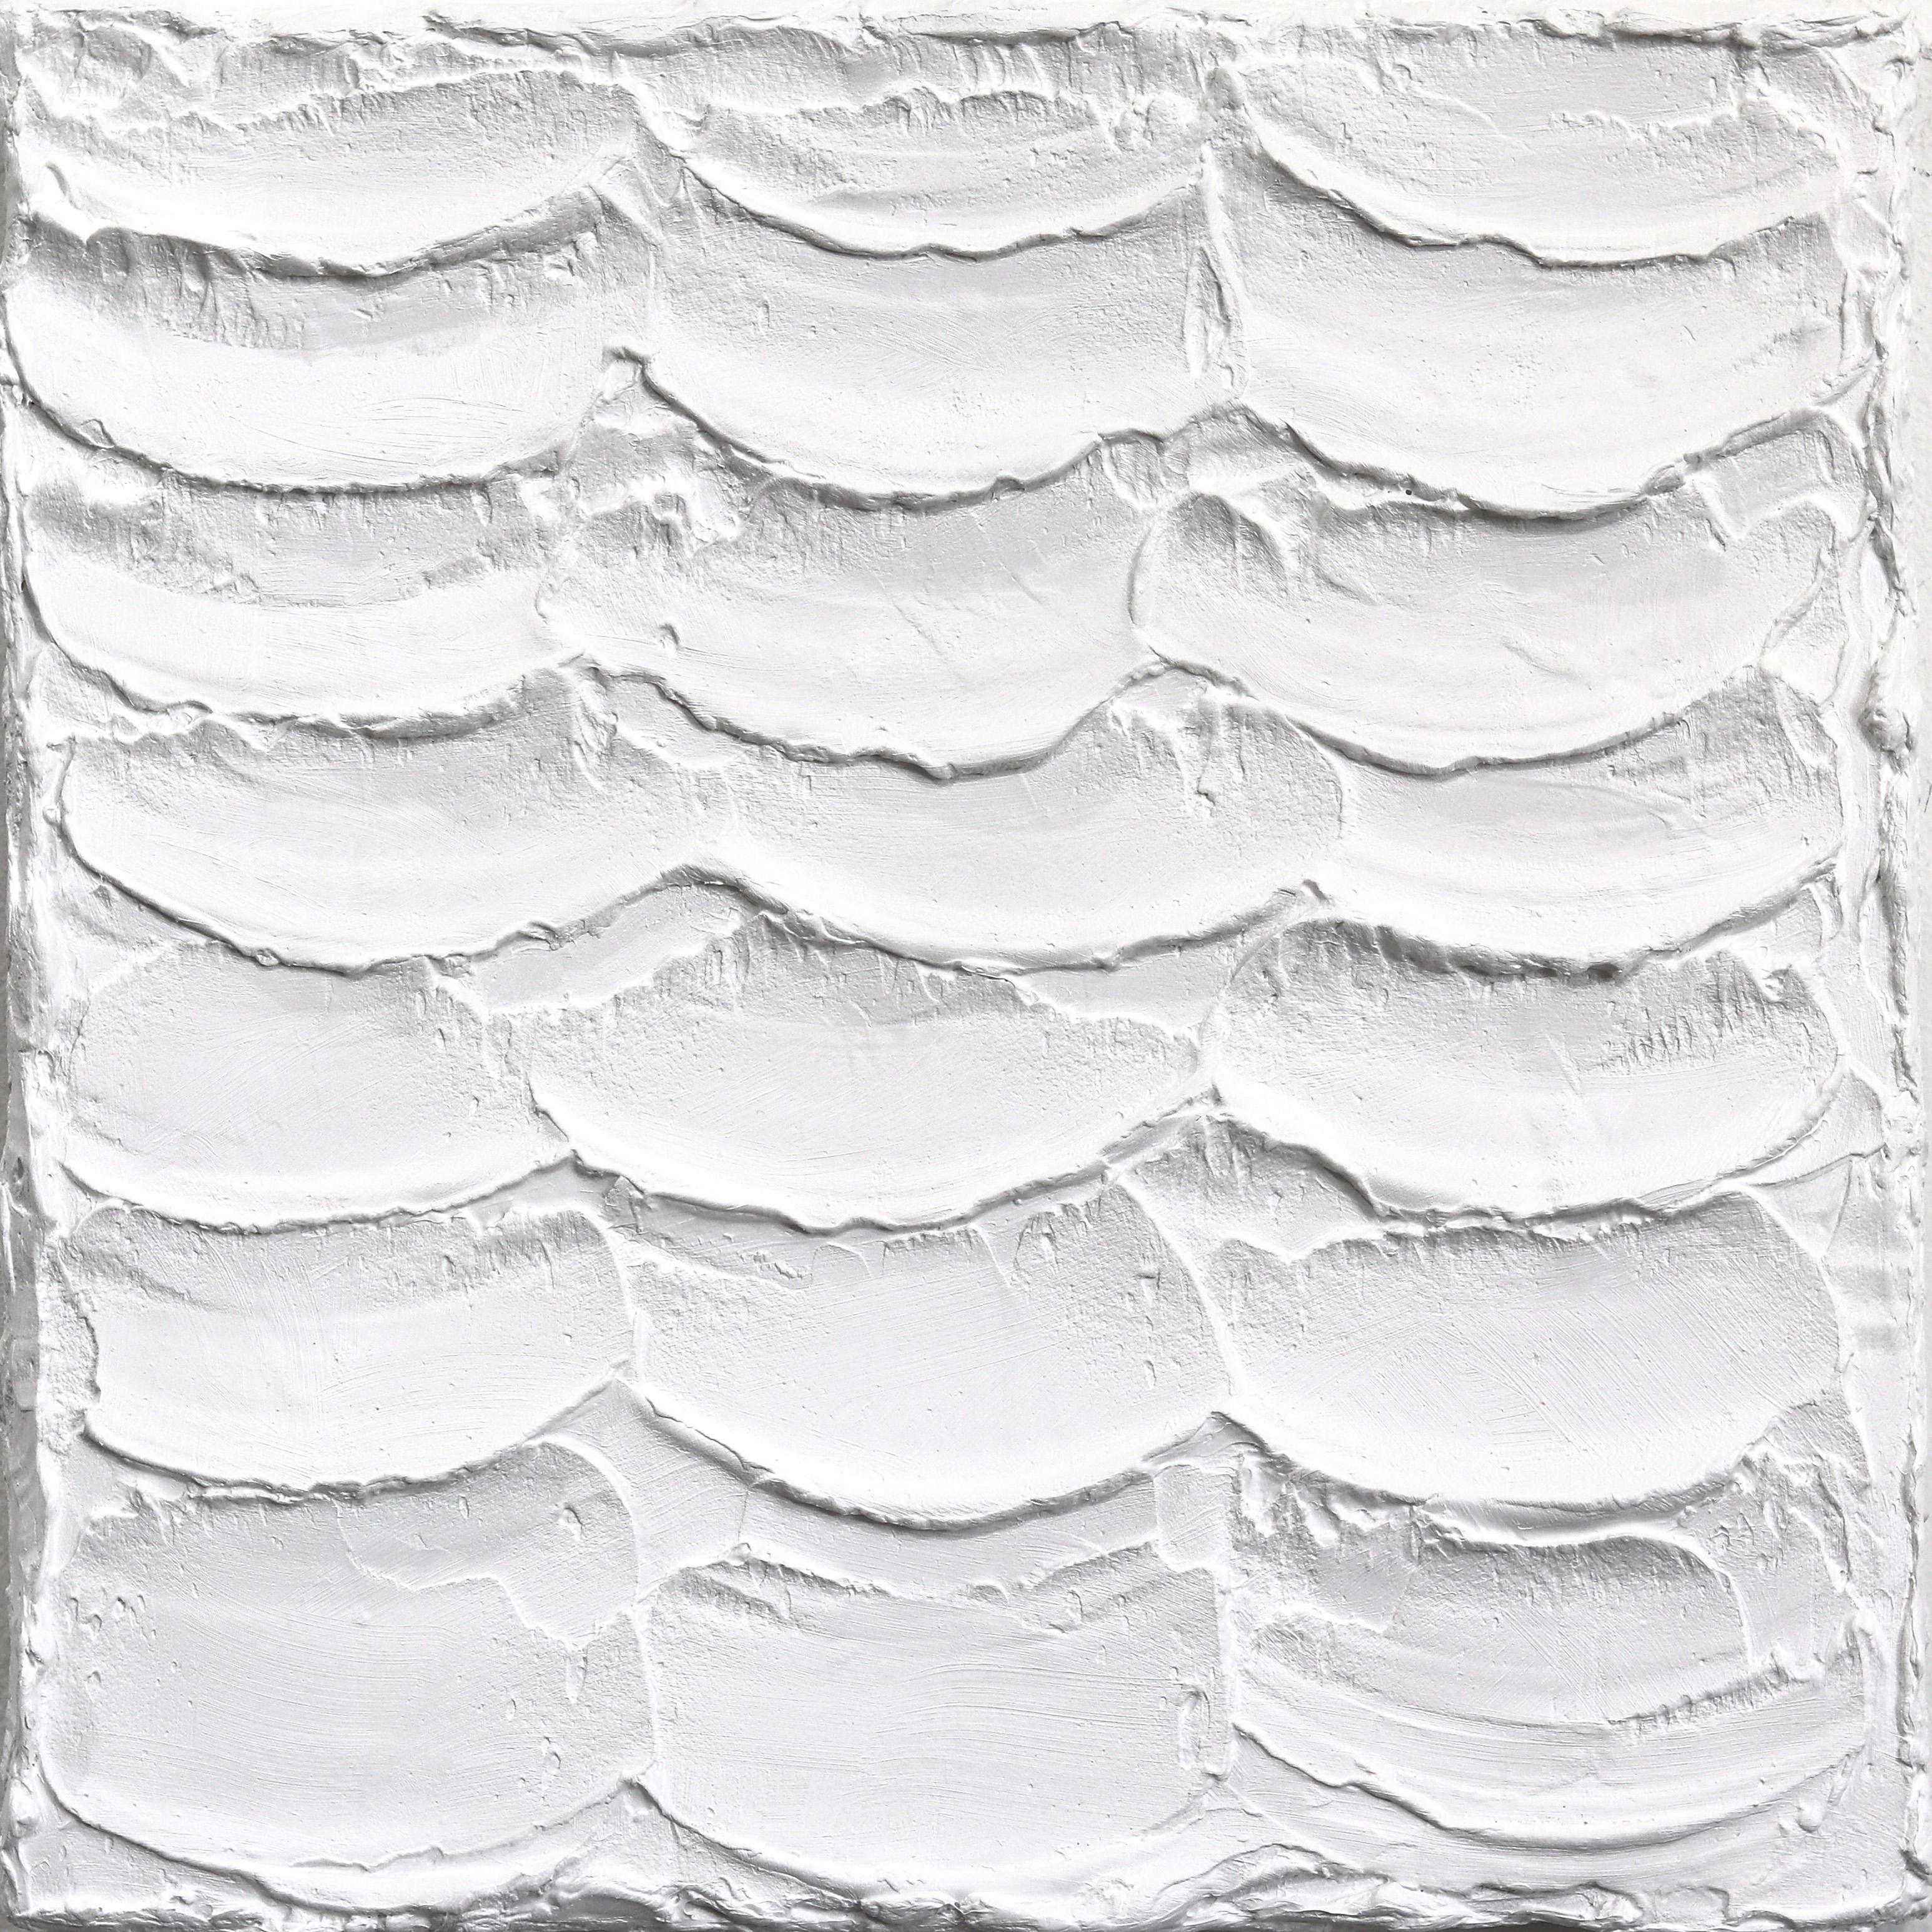 Len Klikunas Abstract Sculpture - Rugged Elements #3 - White Textural Minimalist Sculptural Artwork on Canvas